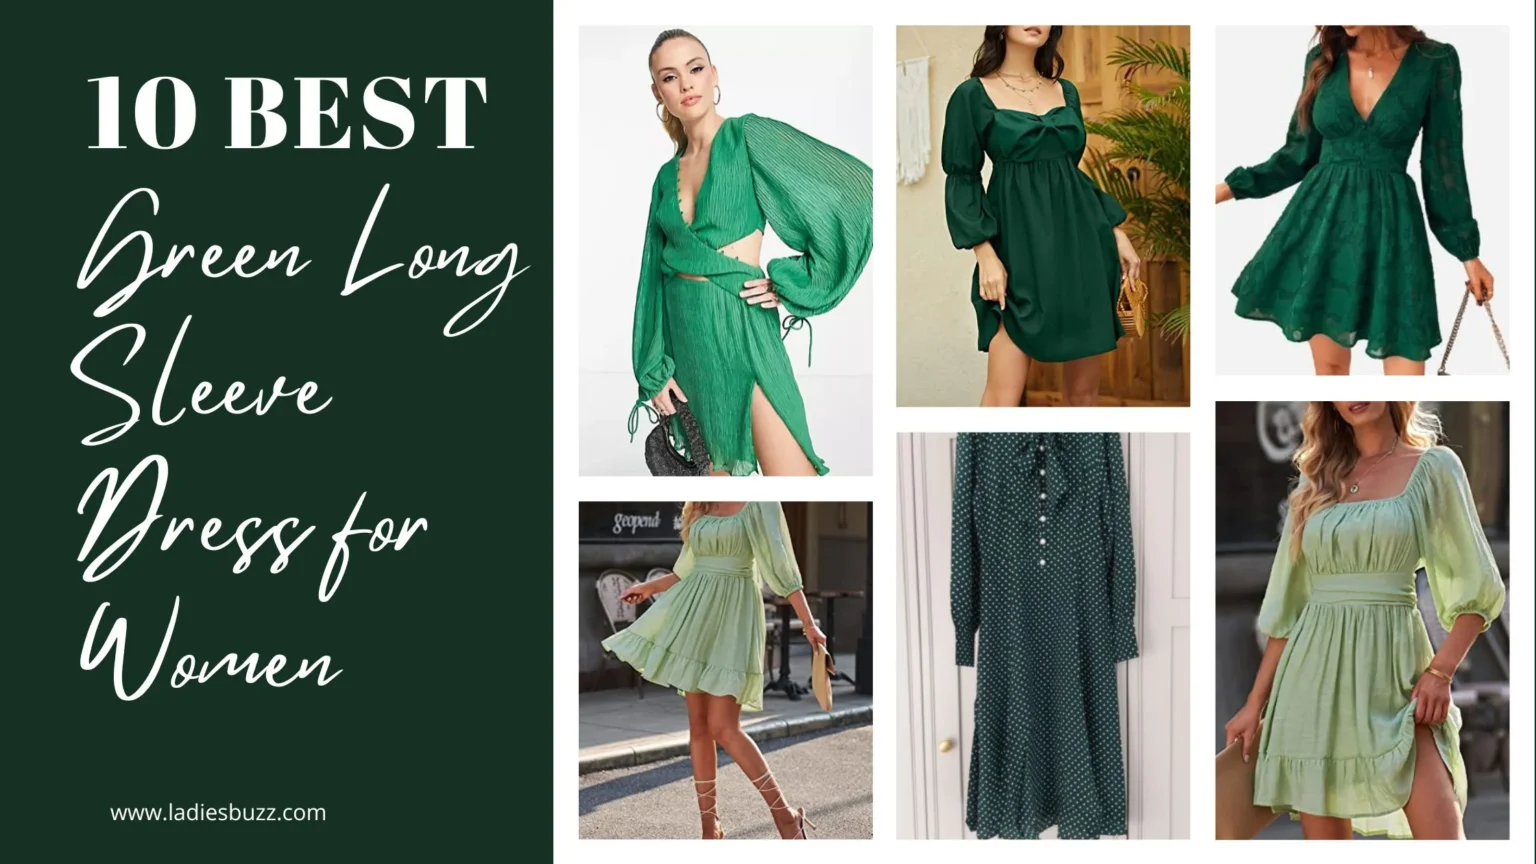 Green Long Sleeve Dress for Women